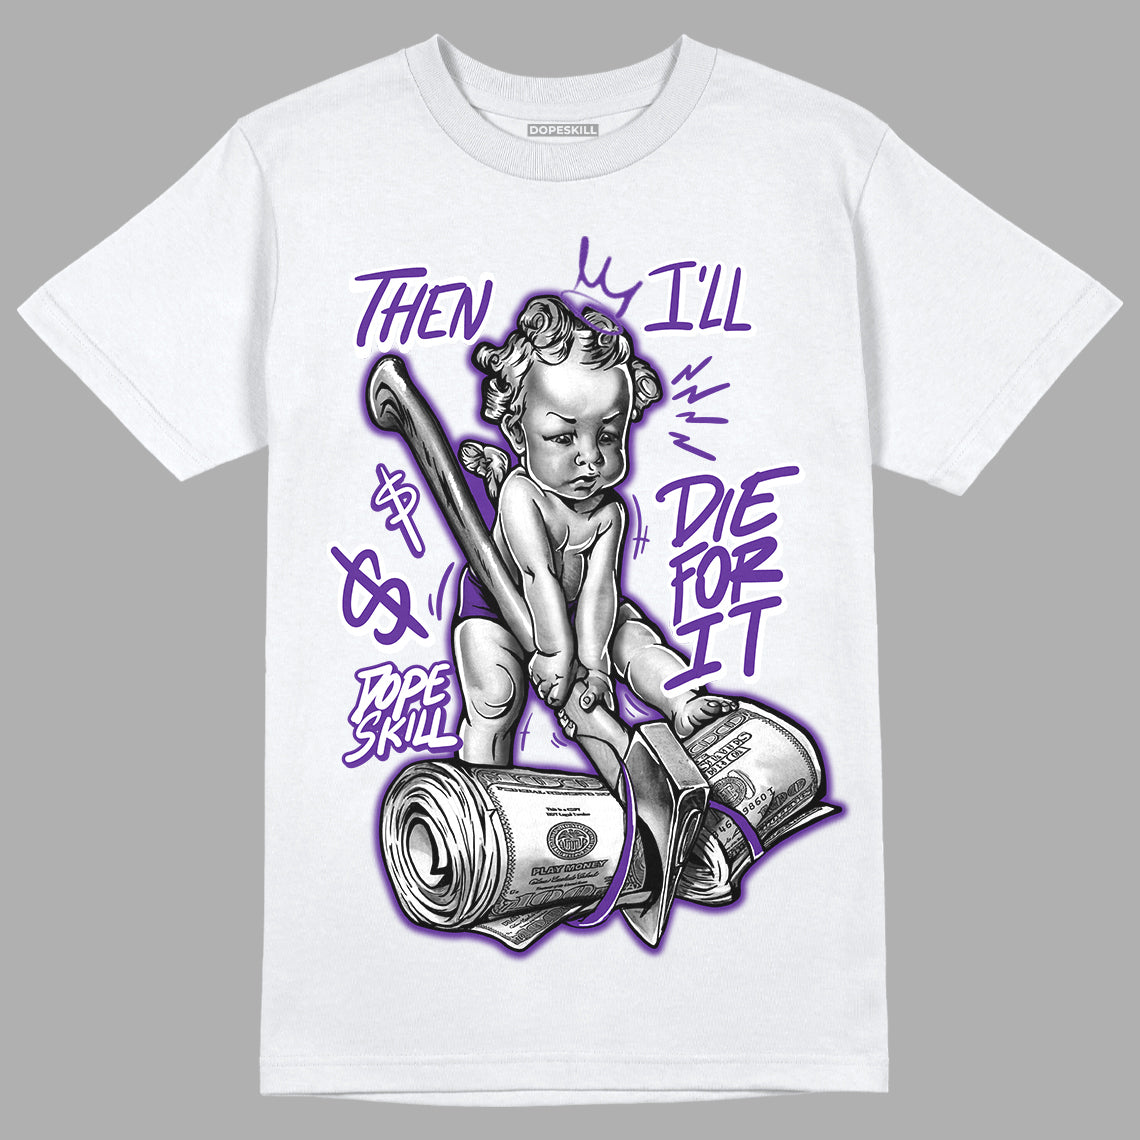 Dark Iris 3s DopeSkill T-Shirt Then I'll Die For It Graphic - White 